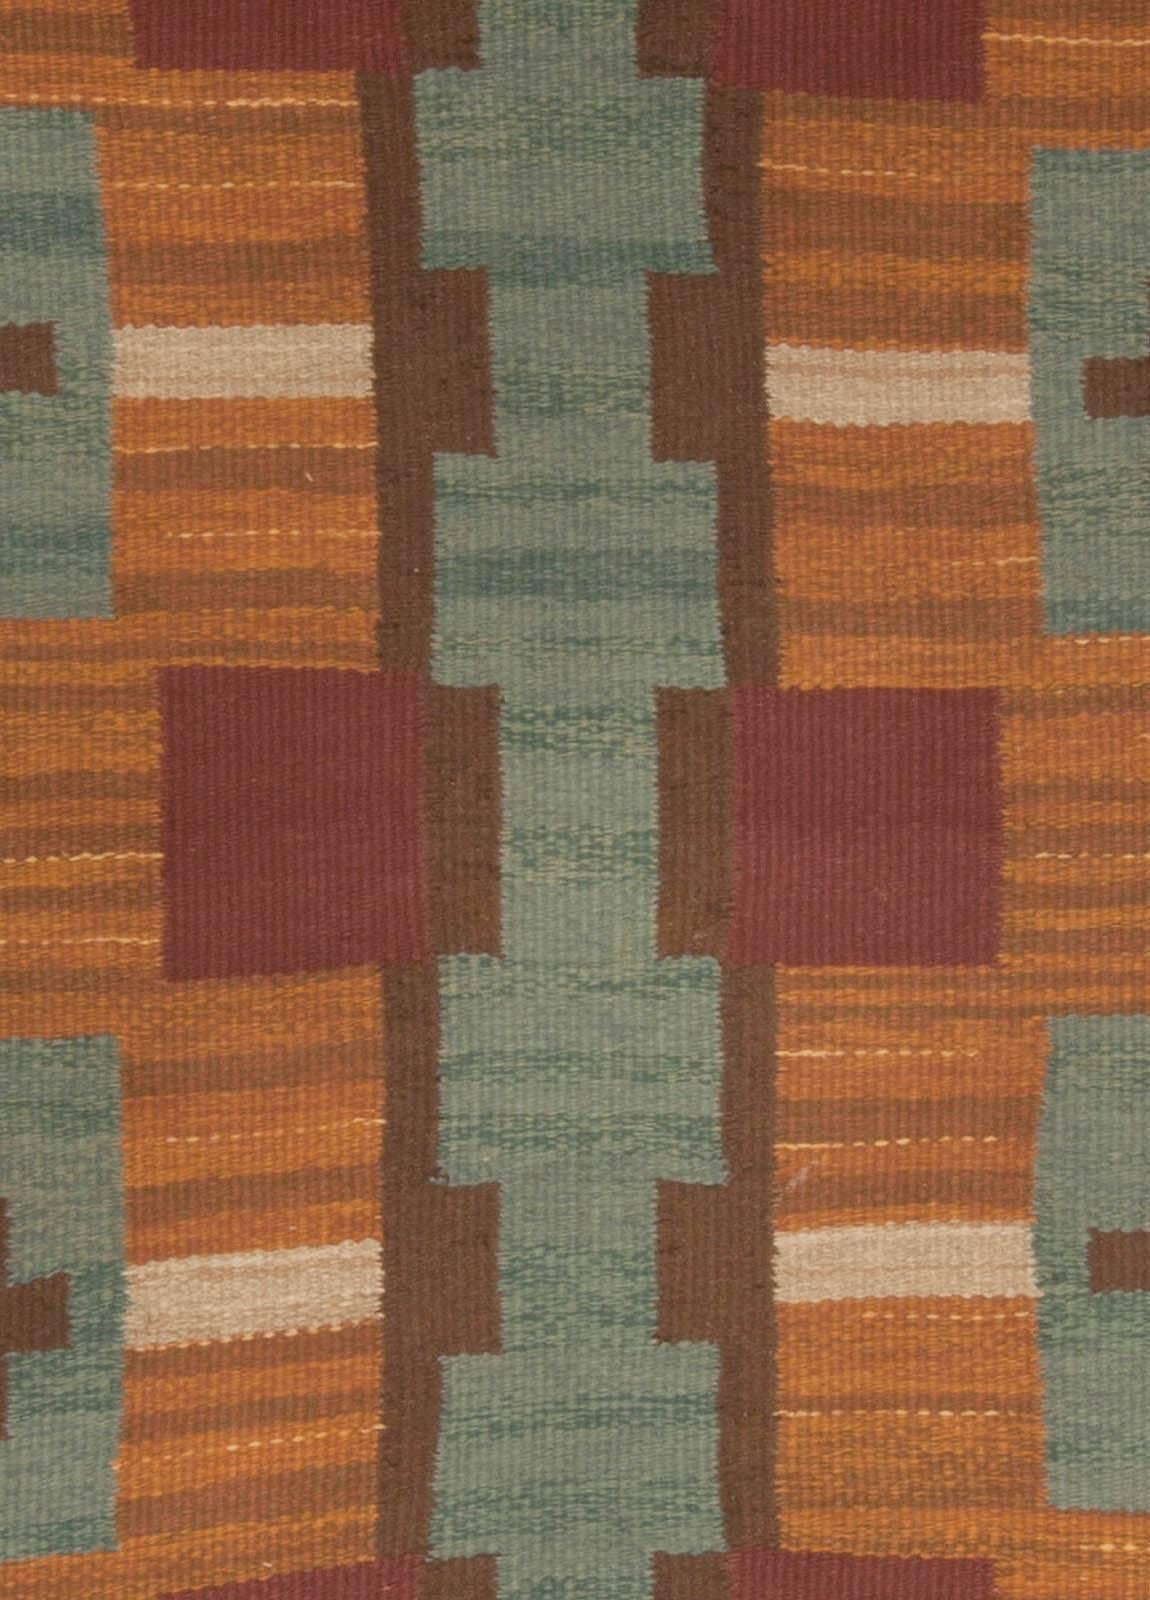 Vintage Swedish Brown & Burgundy, Beige & Green - Blue Wool Rug
Size: 10'7